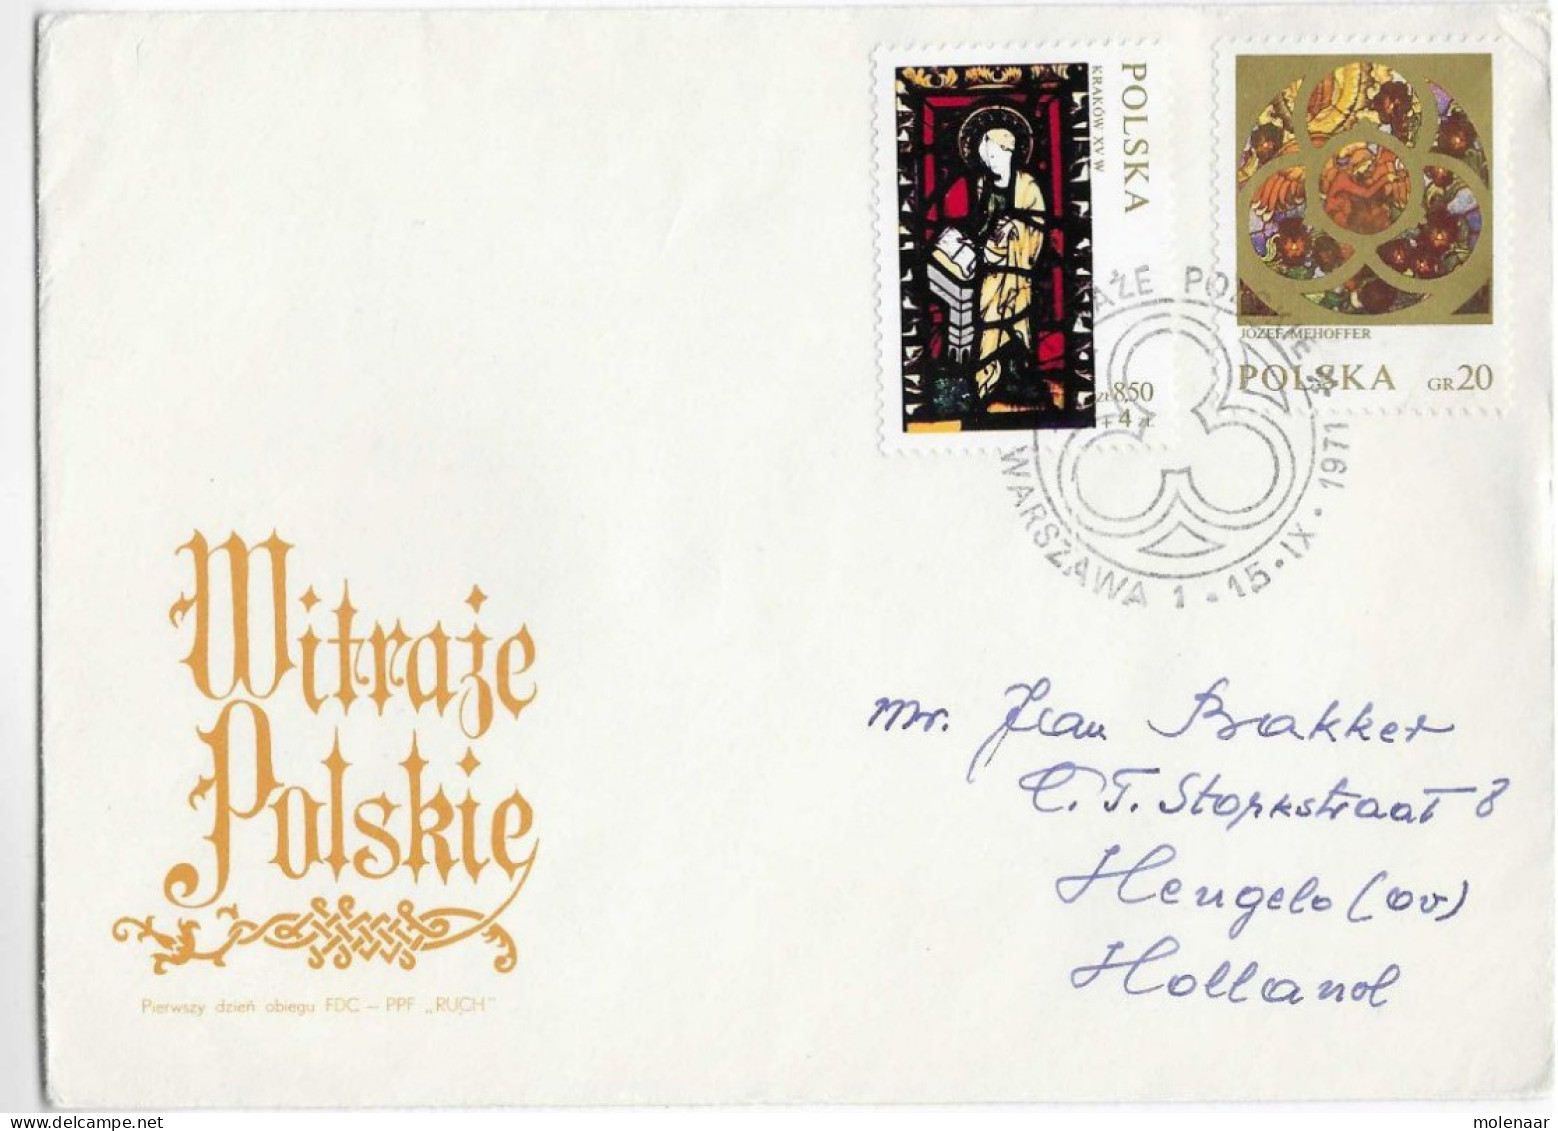 Postzegels > Europa > Polen > 1944-.... Republiek > 1971-80 >brief Me No. 2105 (17111) - Briefe U. Dokumente